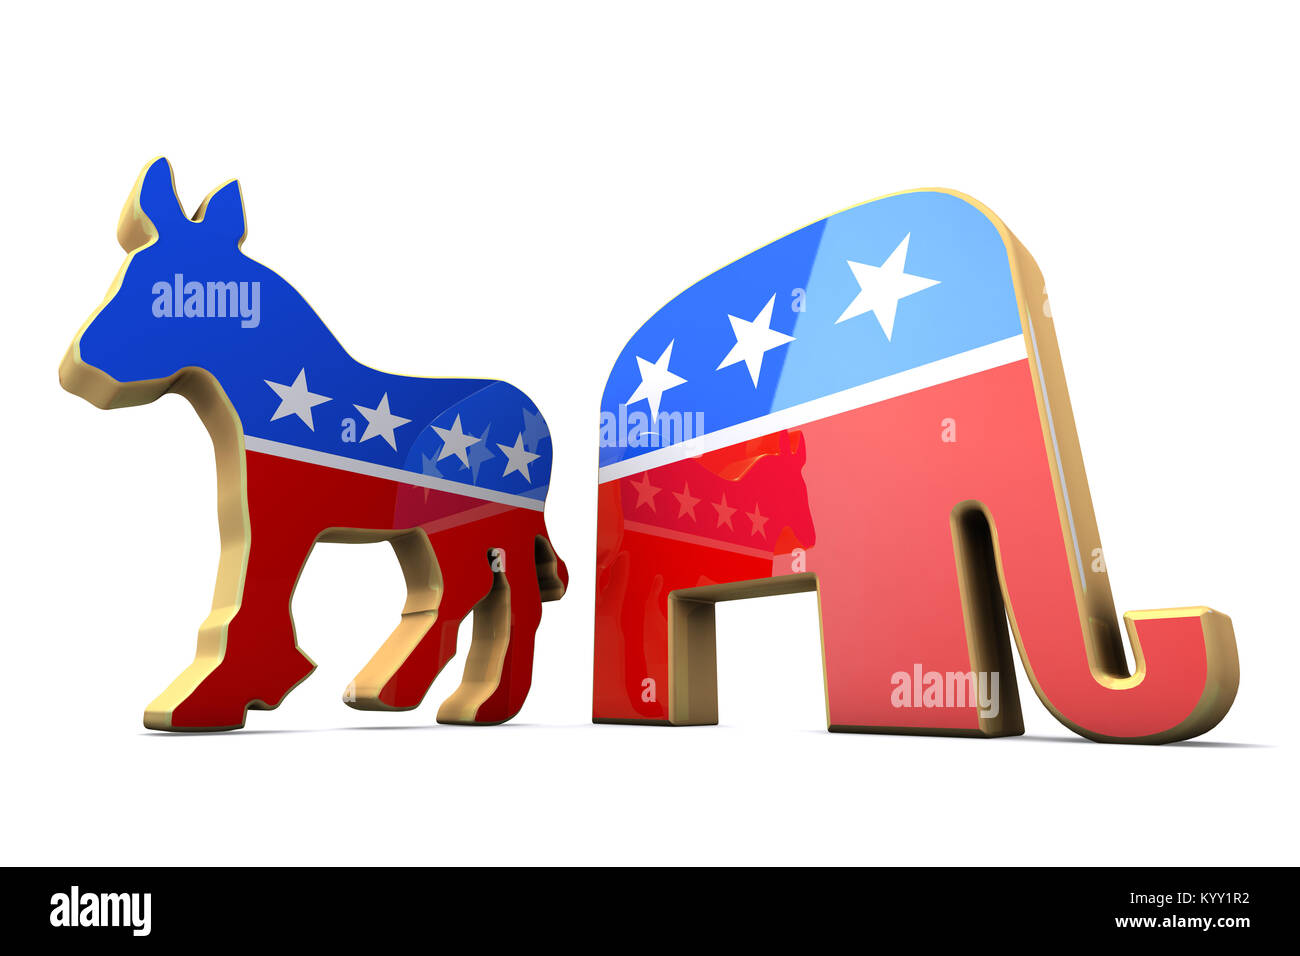 Democrat Party and Republican Party Symbols Stock Photo